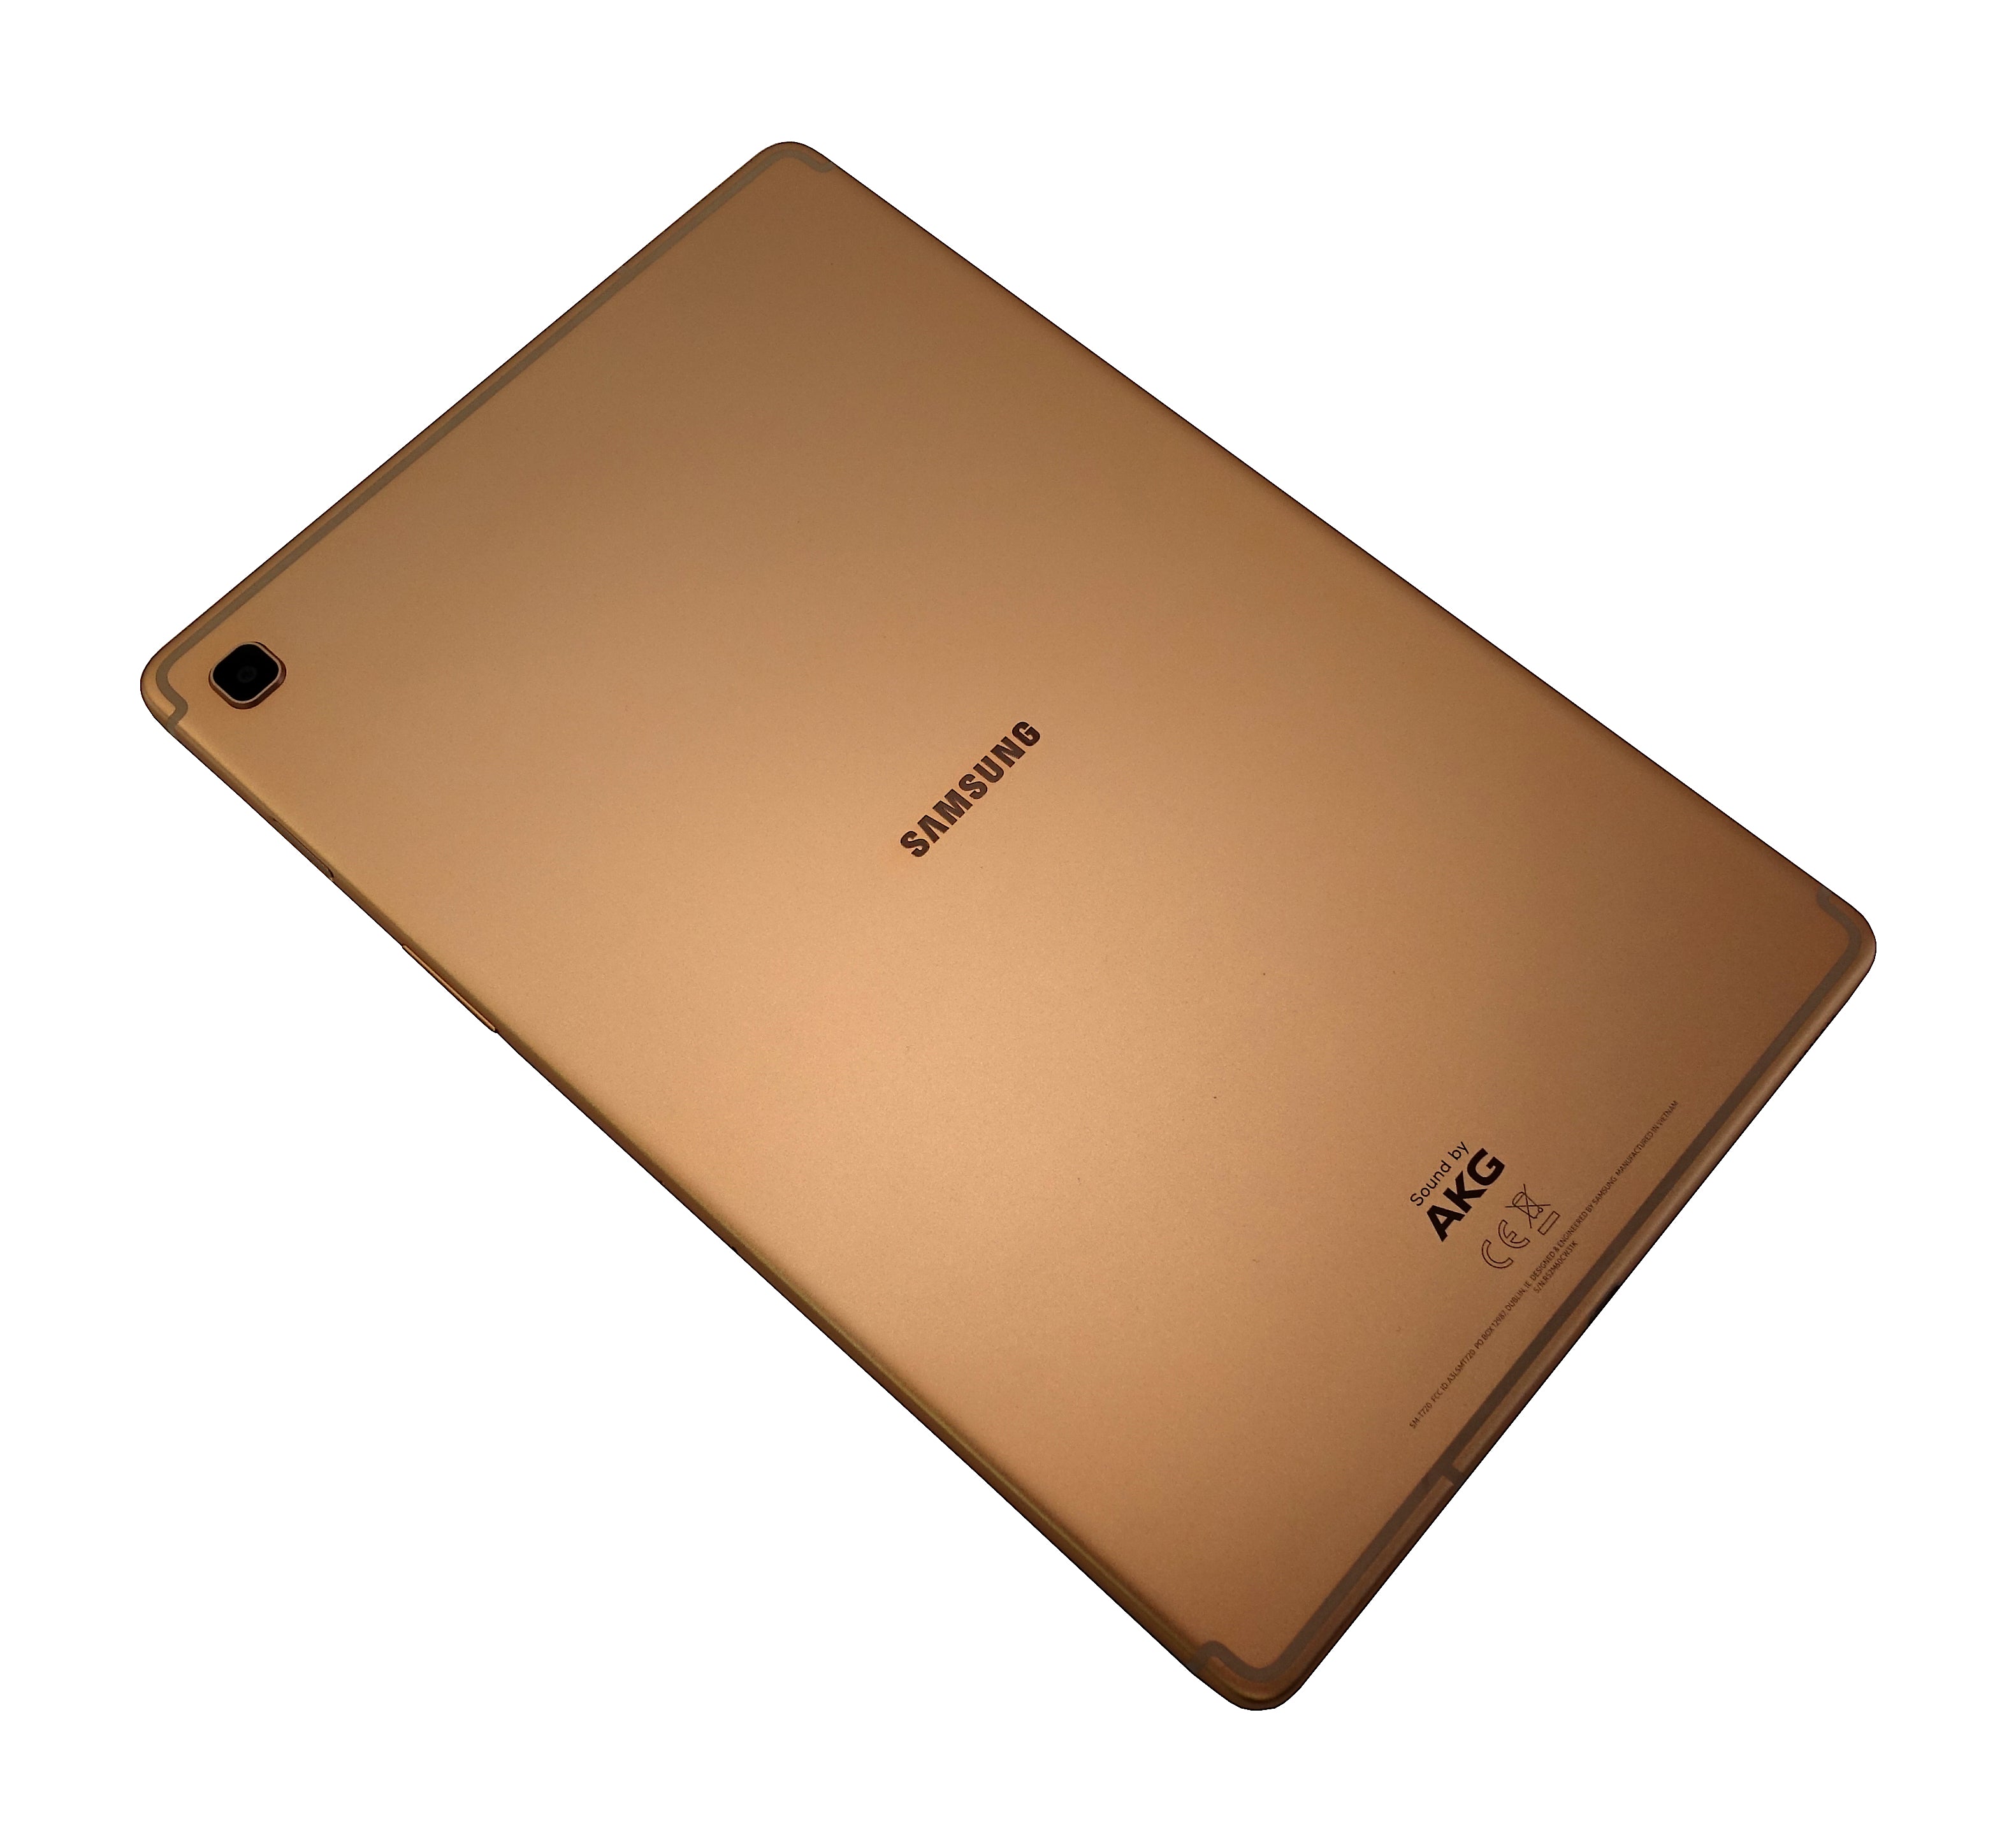 Samsung Galaxy Tab S5e Tablet, 10.5", 64GB, WiFi, Gold, SM-T720